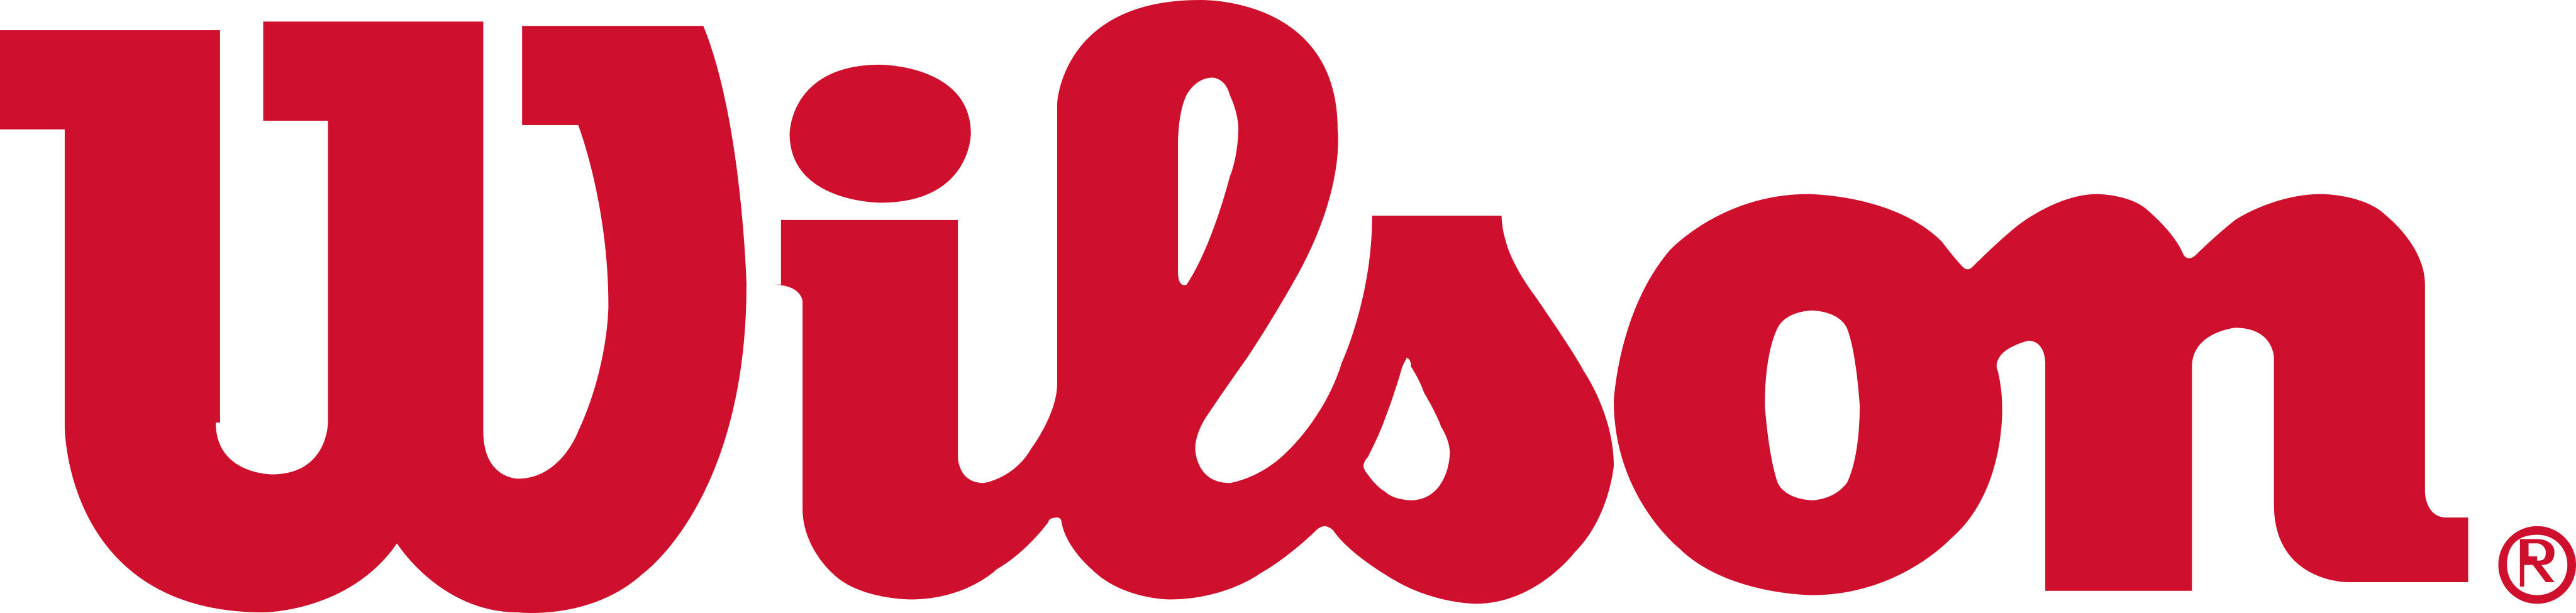 wilson logo - Wilson Logo